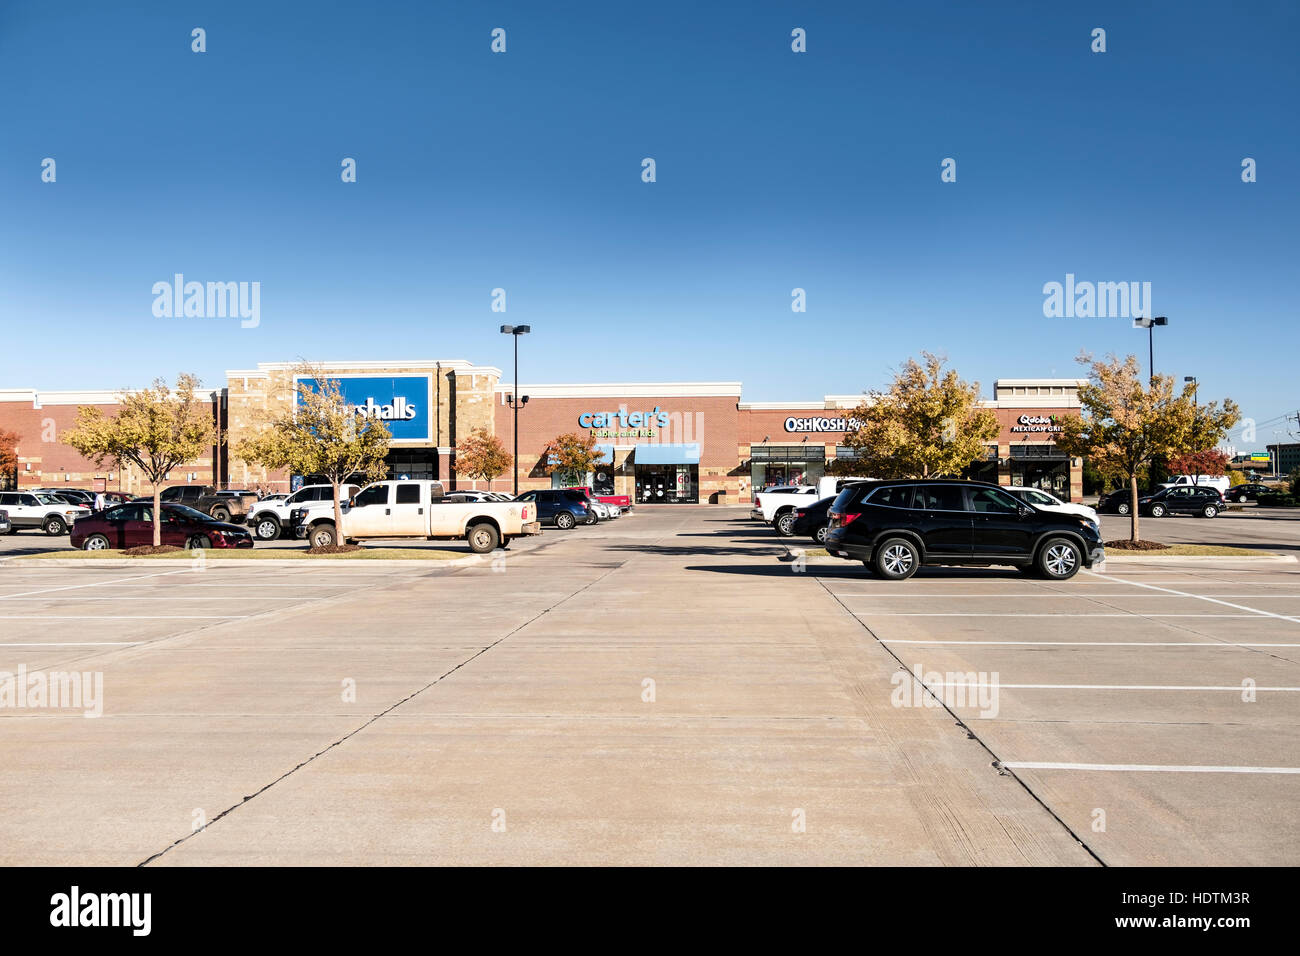 A strip mall and parking lot, showing Marshalls, Carter's, OshKosh B'gosh and Qdoba businesses. Oklahoma City, Oklahoma, USA. Stock Photo